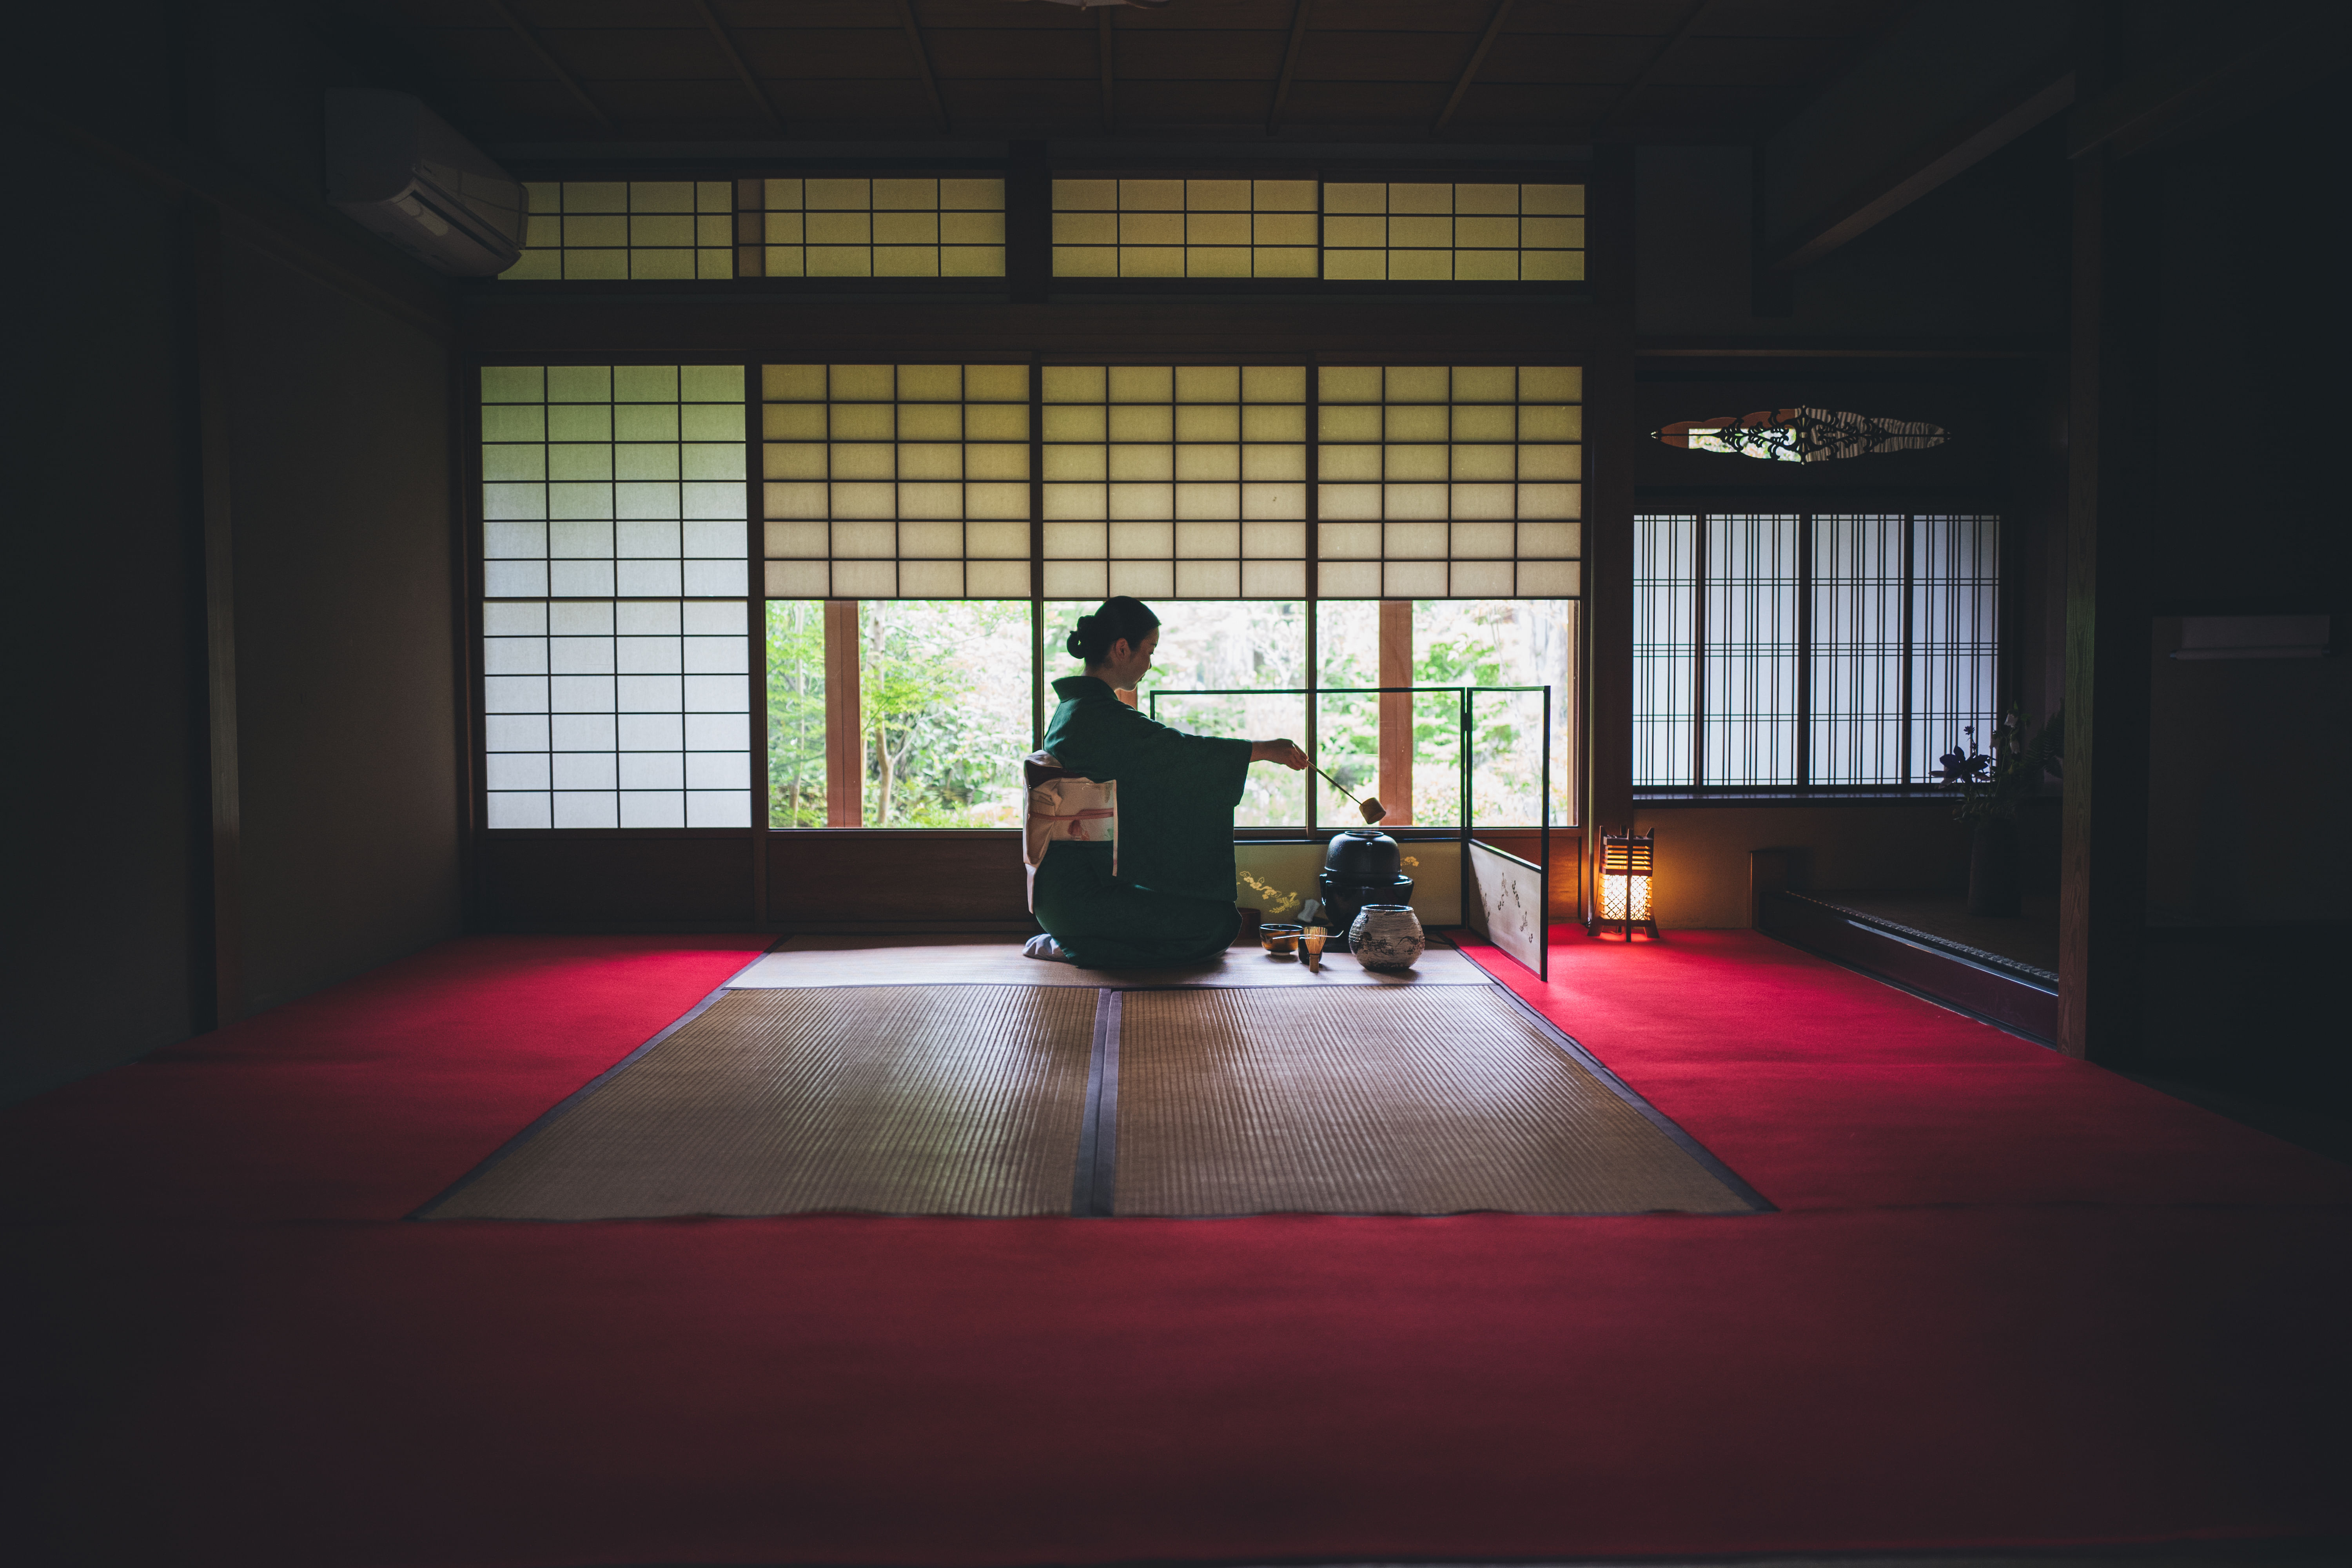 Private tea Ceremony in Kyoto GARDEN TEAHOUSE